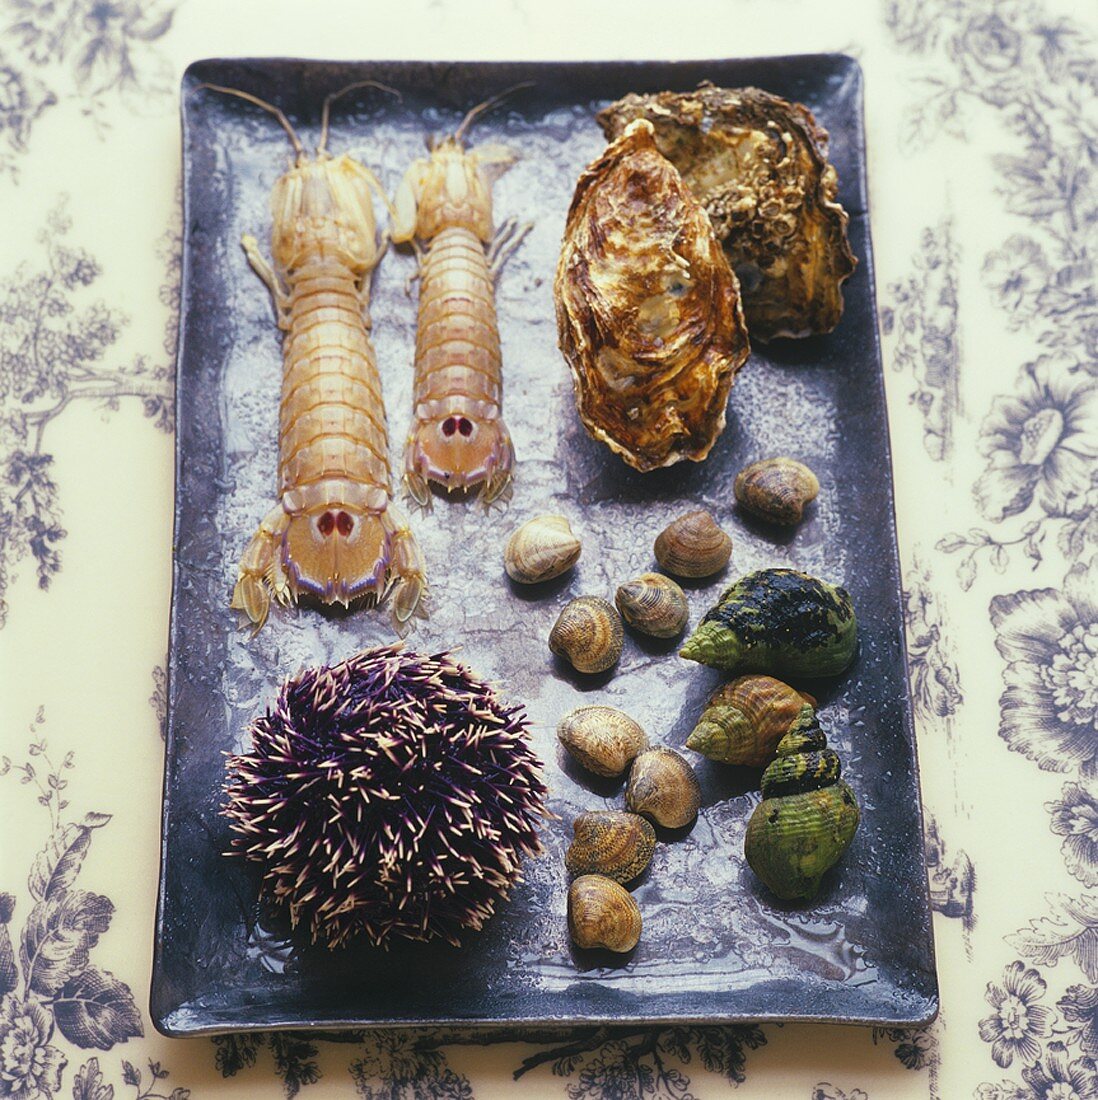 Seafood: shellfish, sea urchin, mantis shrimps, oysters